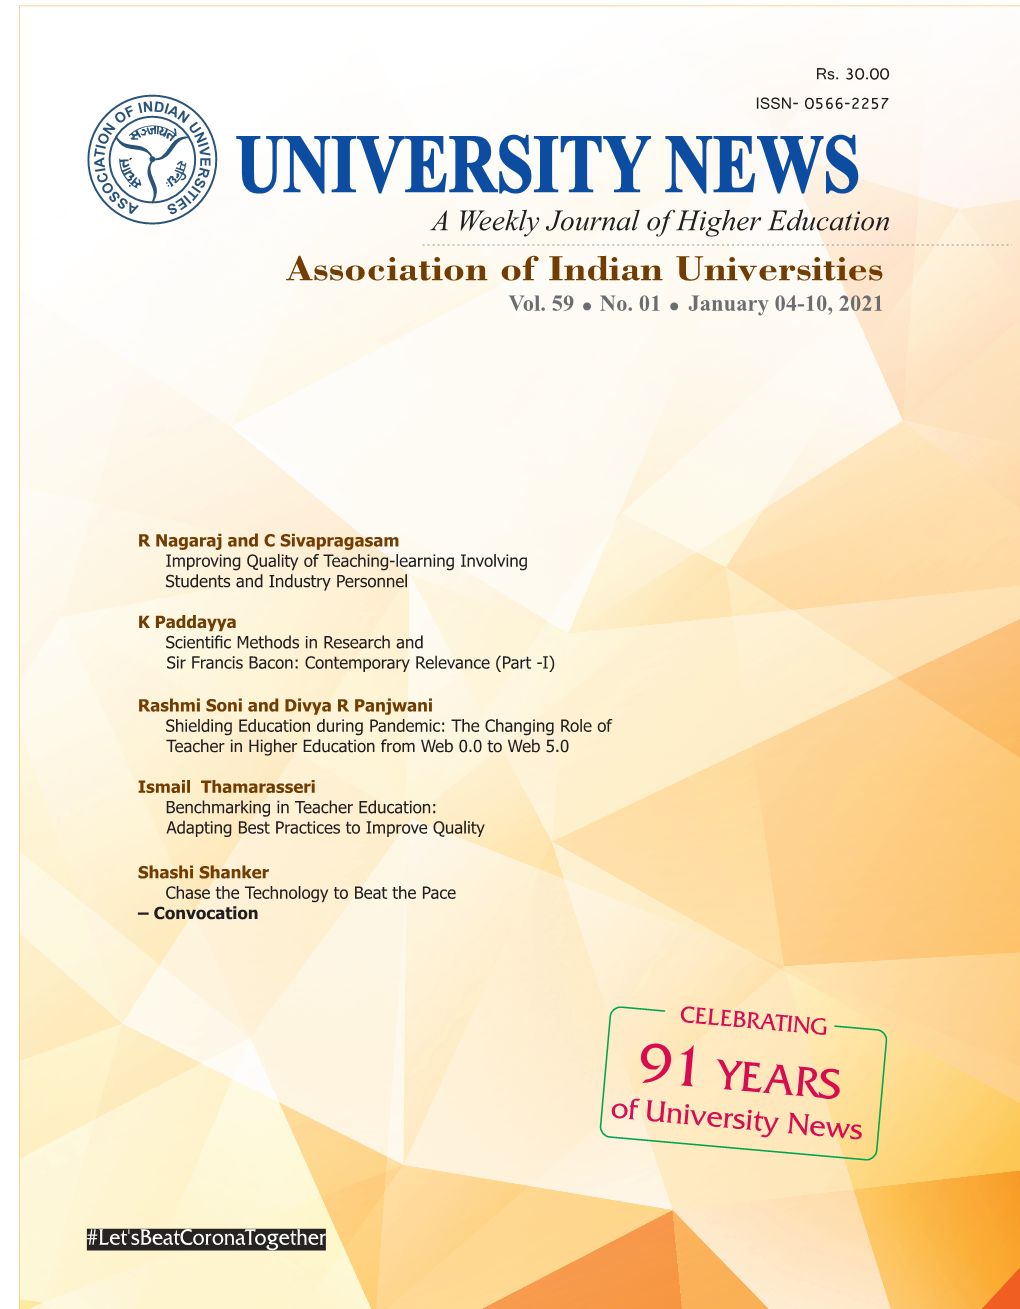 University News Vol-59, No-01, January 04-10, 2021